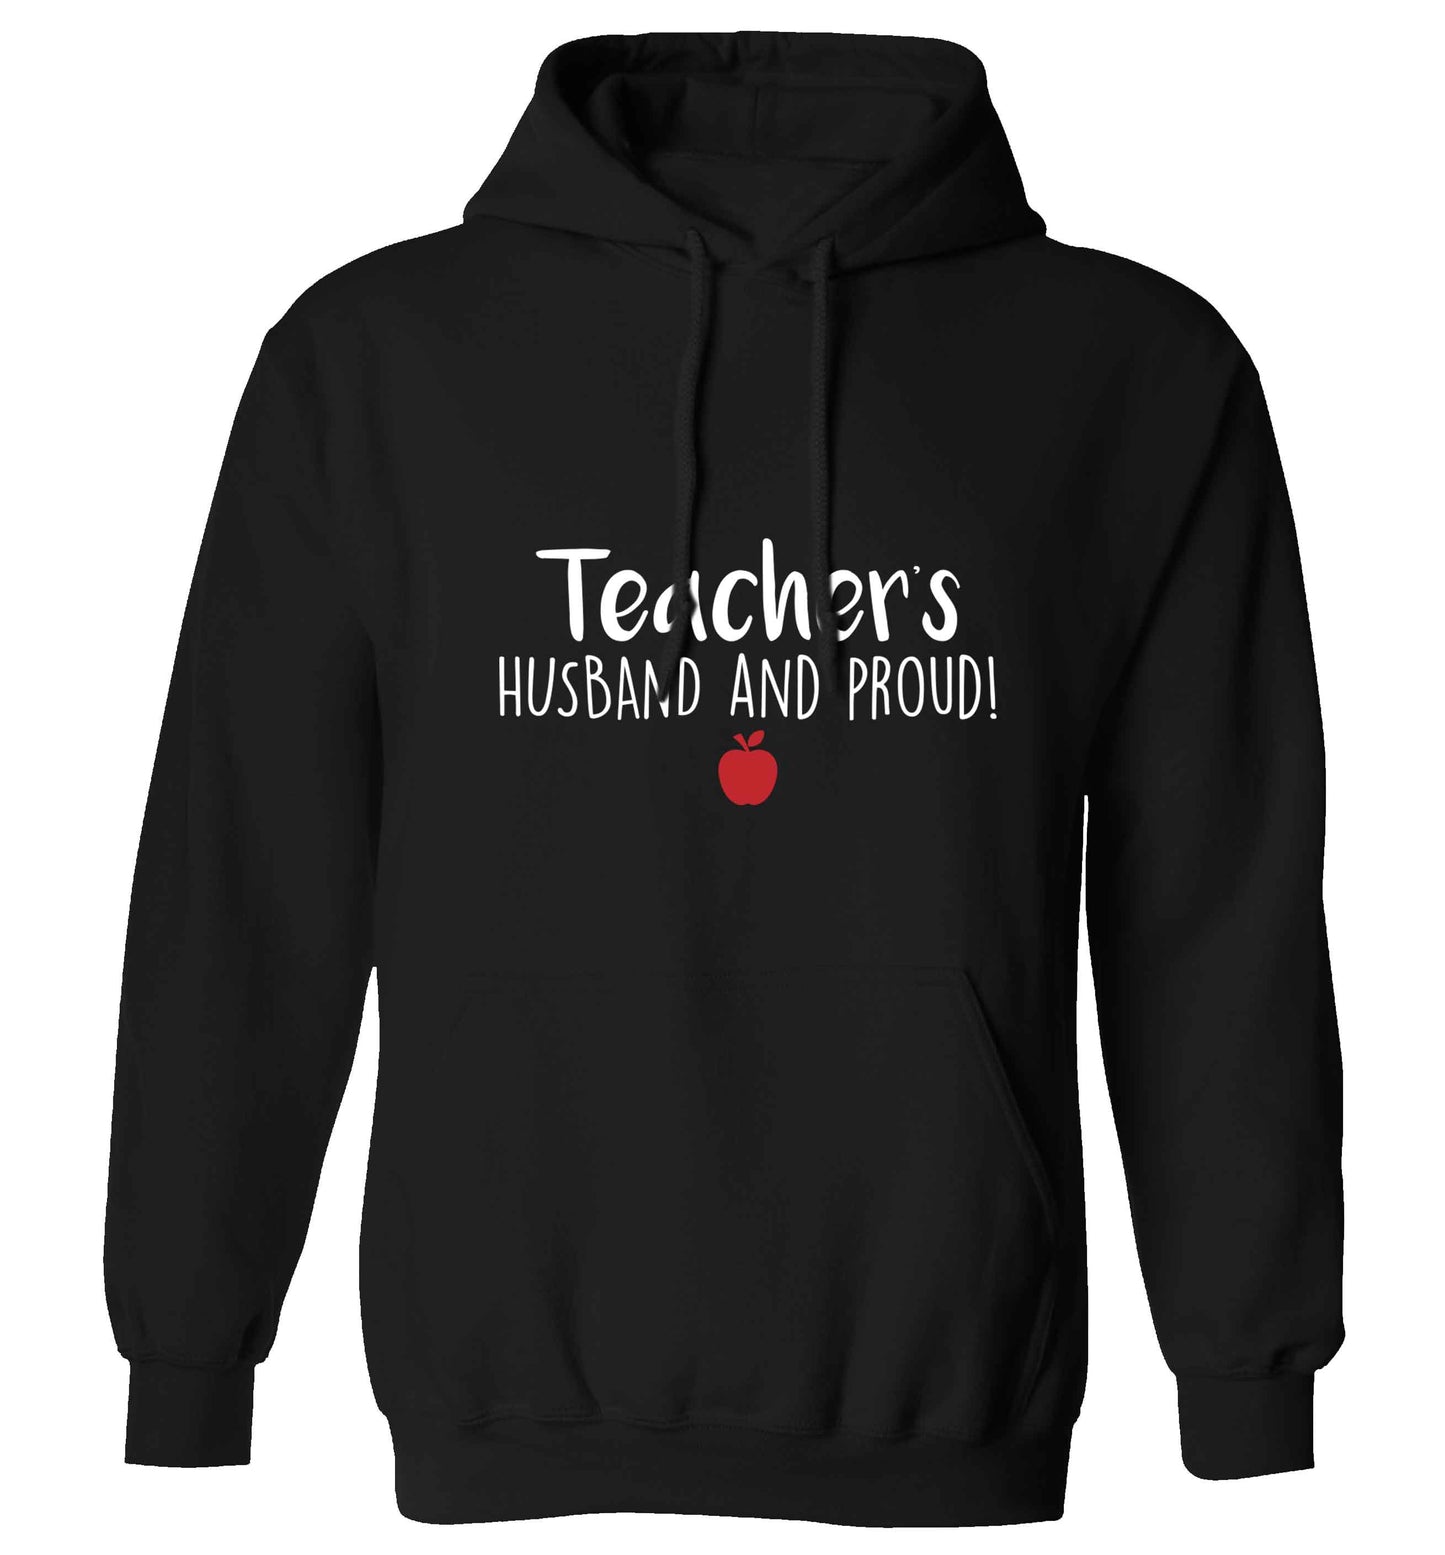 Teachers husband and proud adults unisex black hoodie 2XL